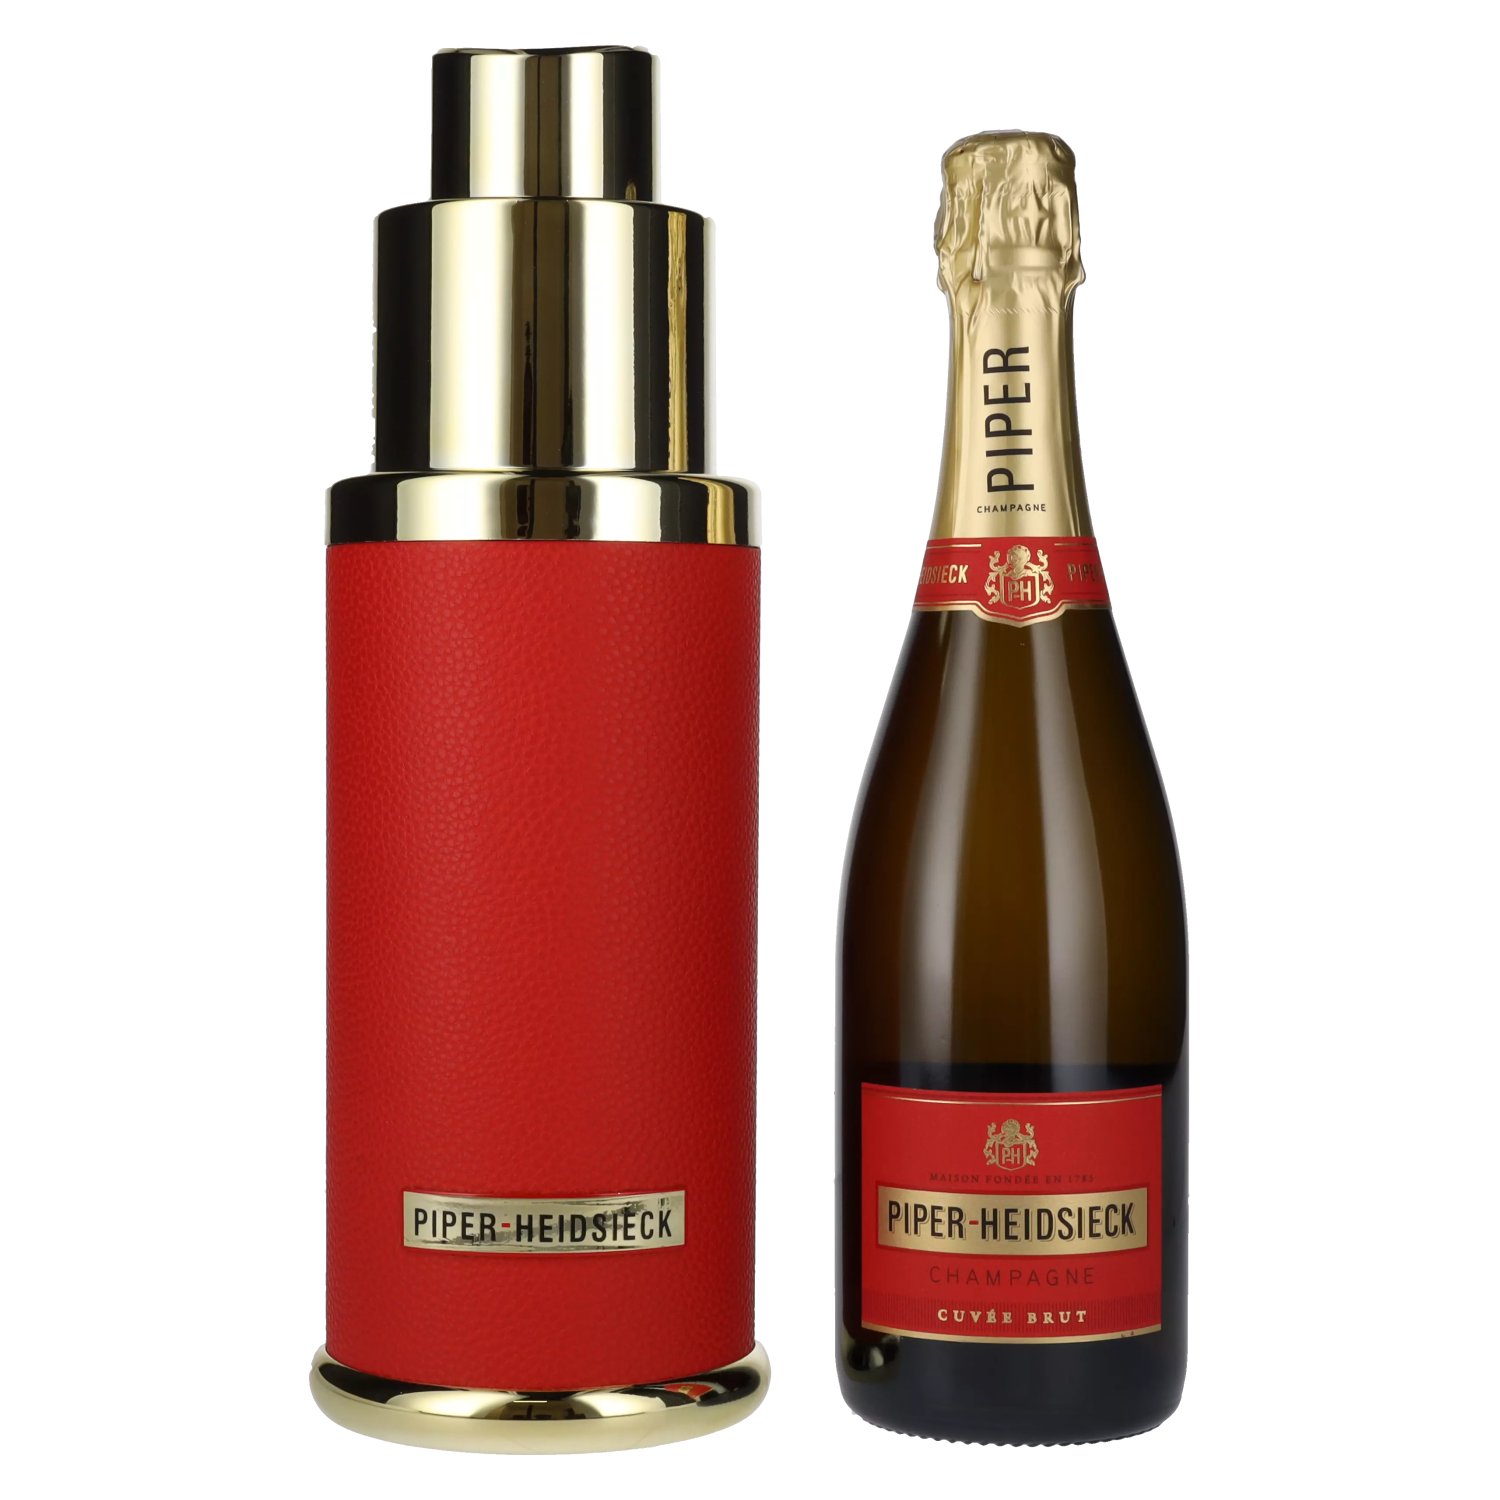 Champagne Piper-Heidsieck BRUT Geschenkbox in 0,75l Perfume Edition Vol. 12% CUVÉE